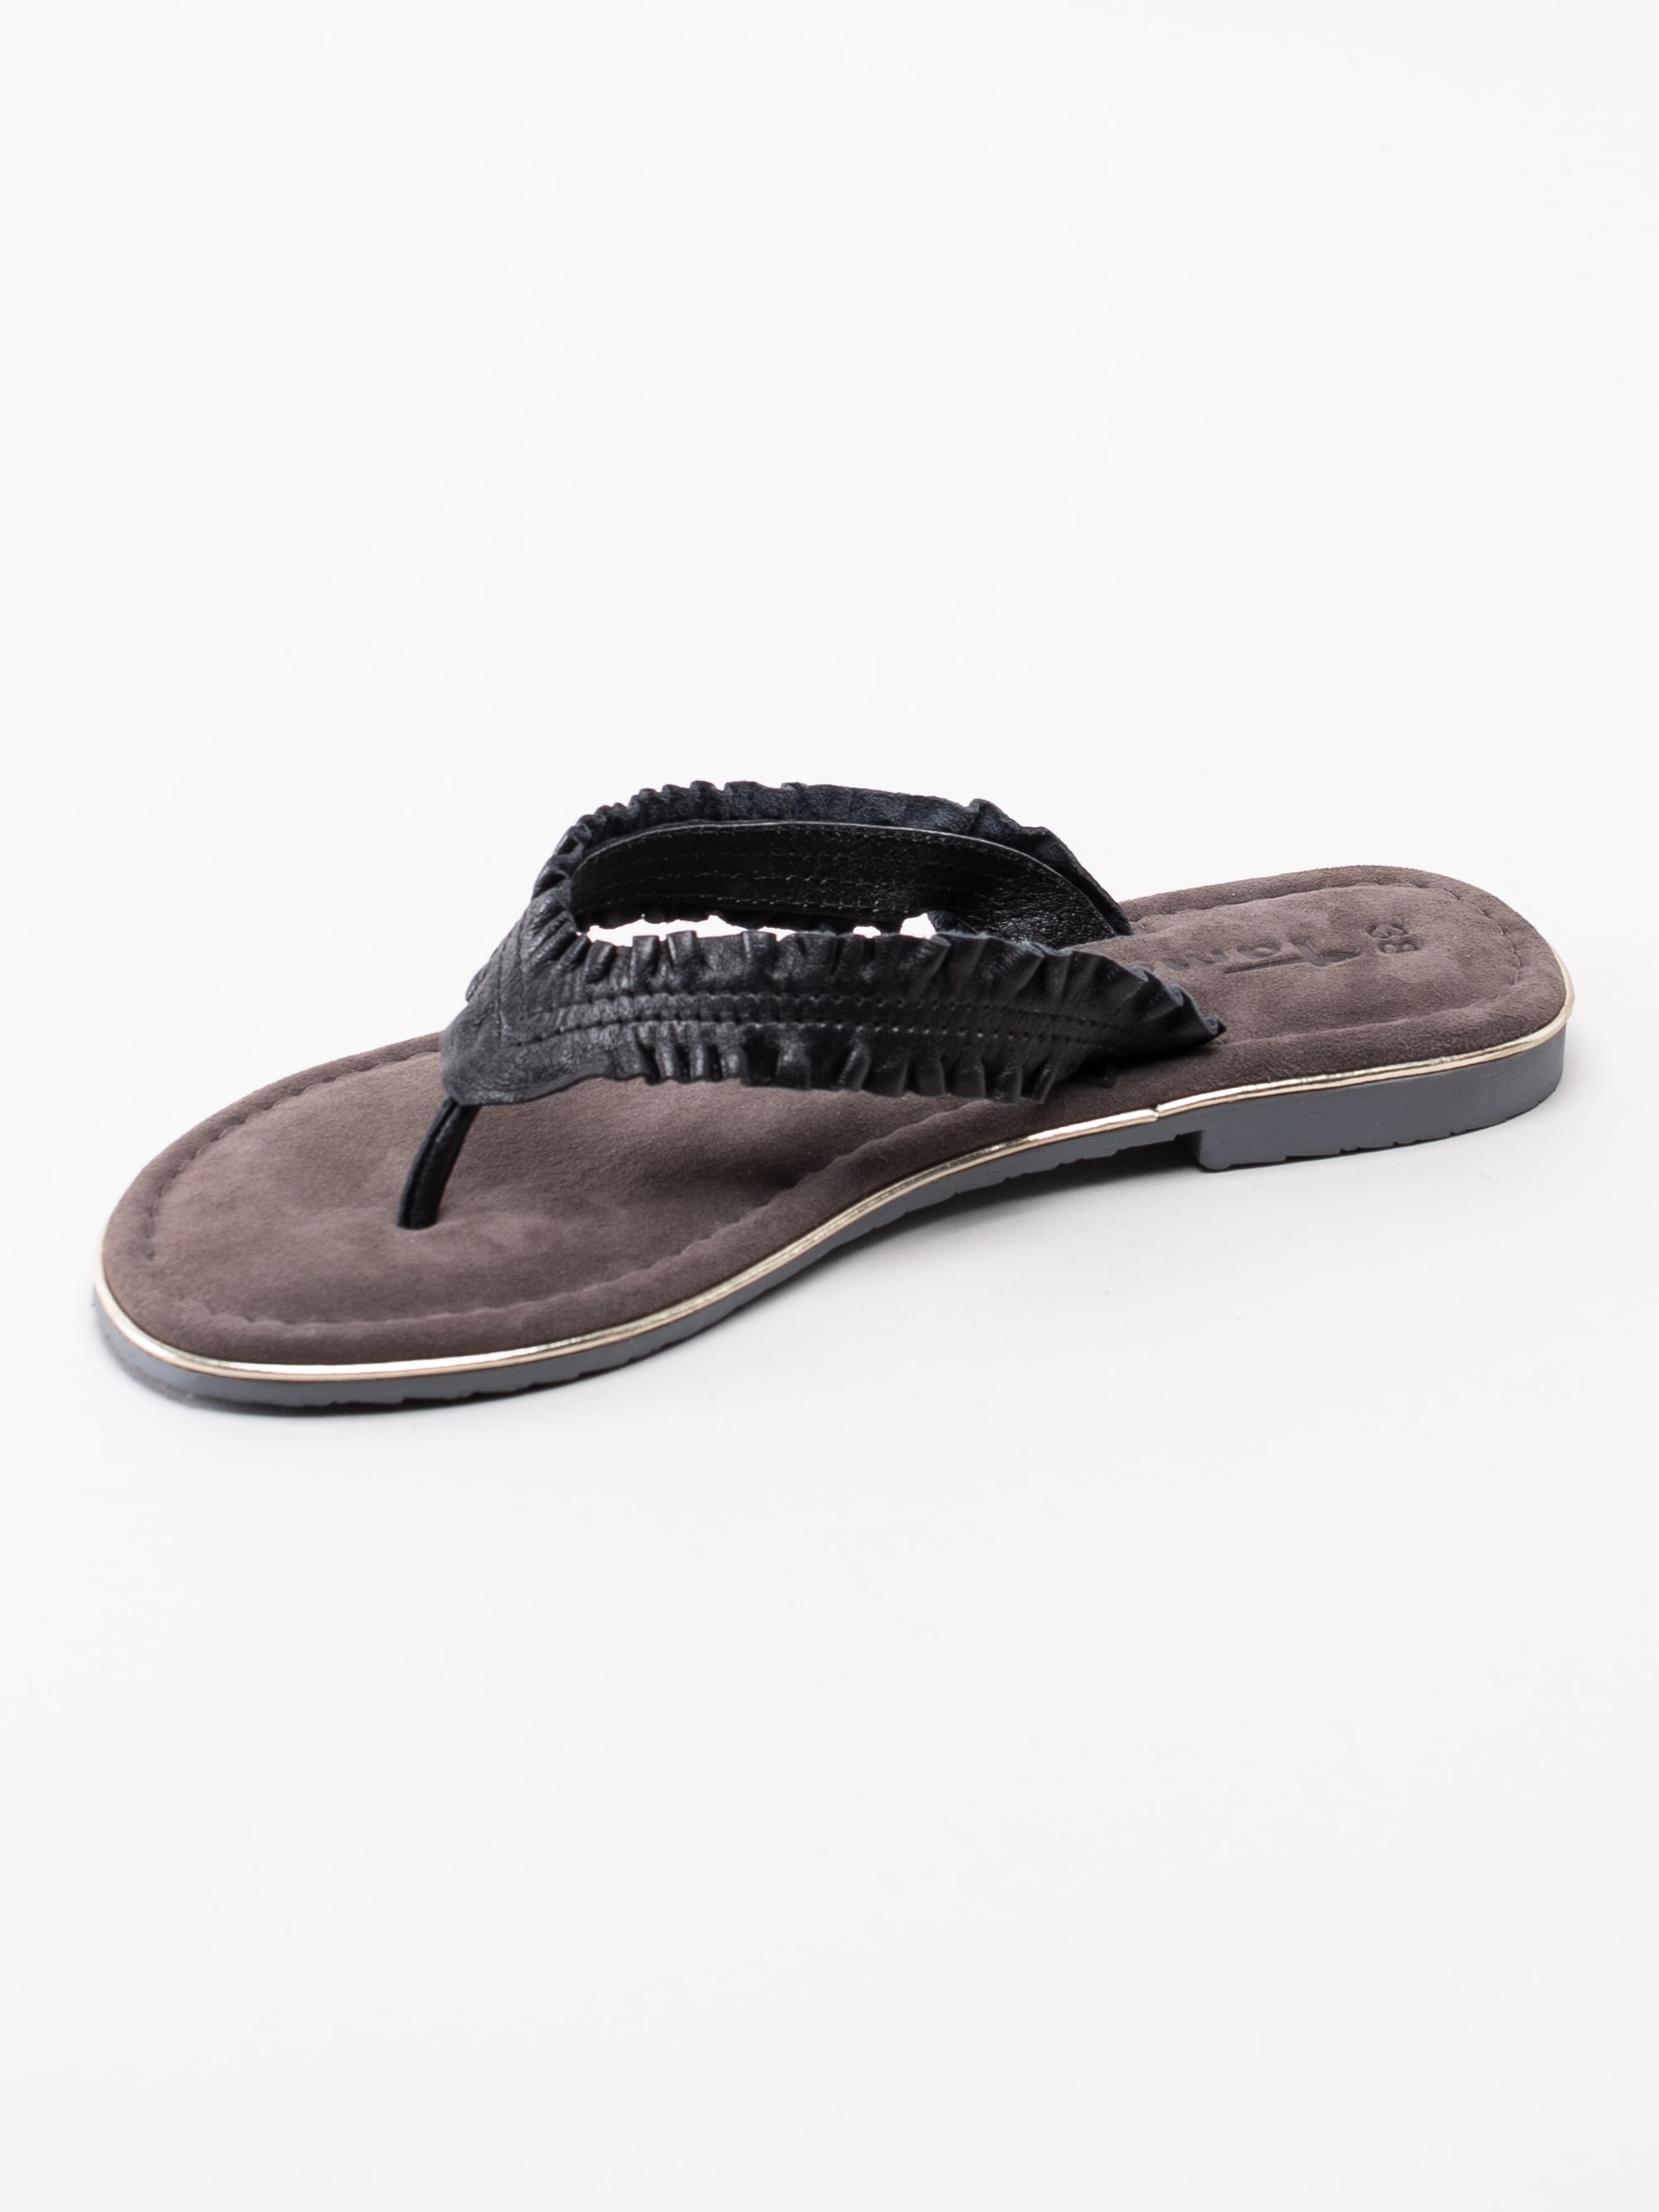 65191080 Tamaris 1-27110-22-001 svarta flip flops sandaler med volang-2